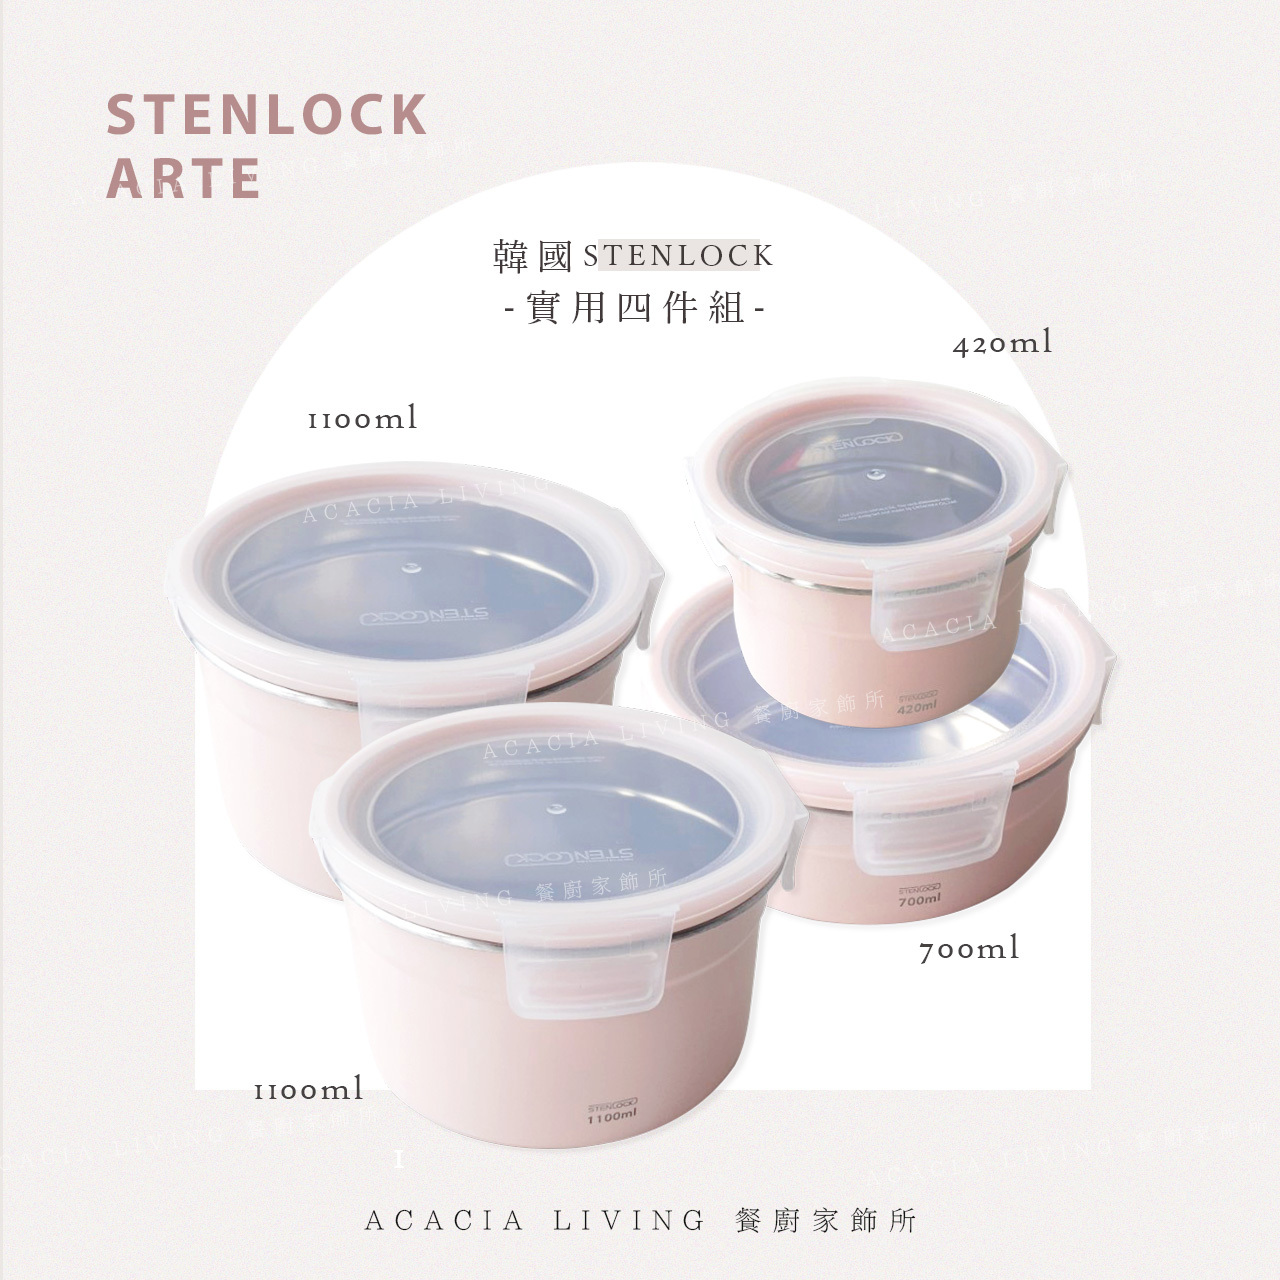 stenlock-new set2